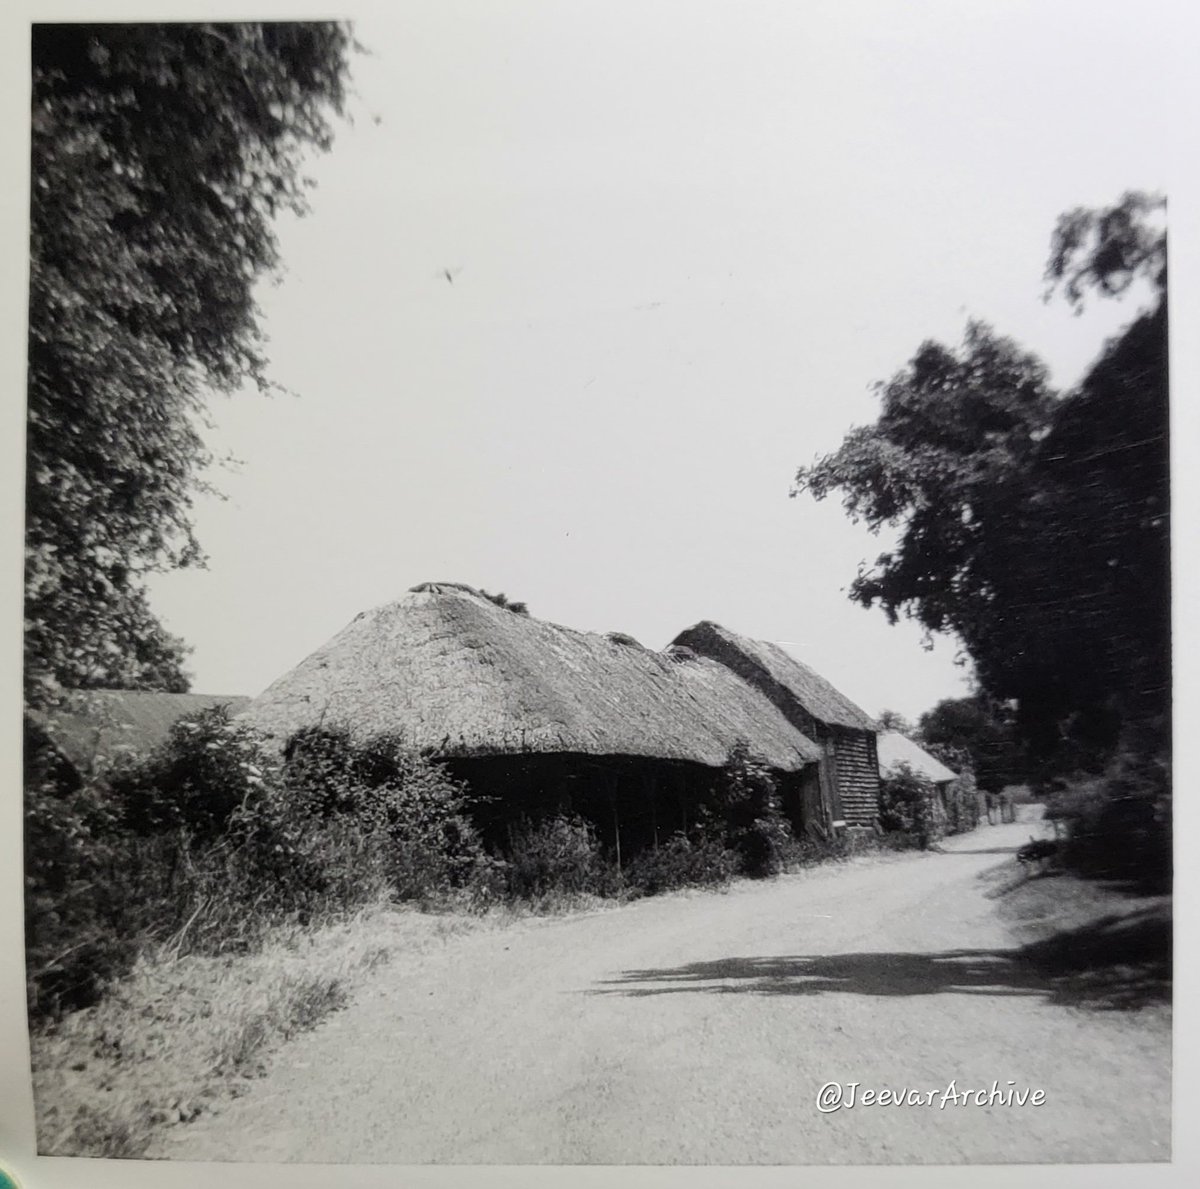 Manor Farm,
Boxworth - Cambridgeshire 
1975

#barn #ruralengland #archives #architecture #Cambridgeshire #historicalpictures #villagelife #jeevararchive #farmbuildings #photoarchive #oldbuilding